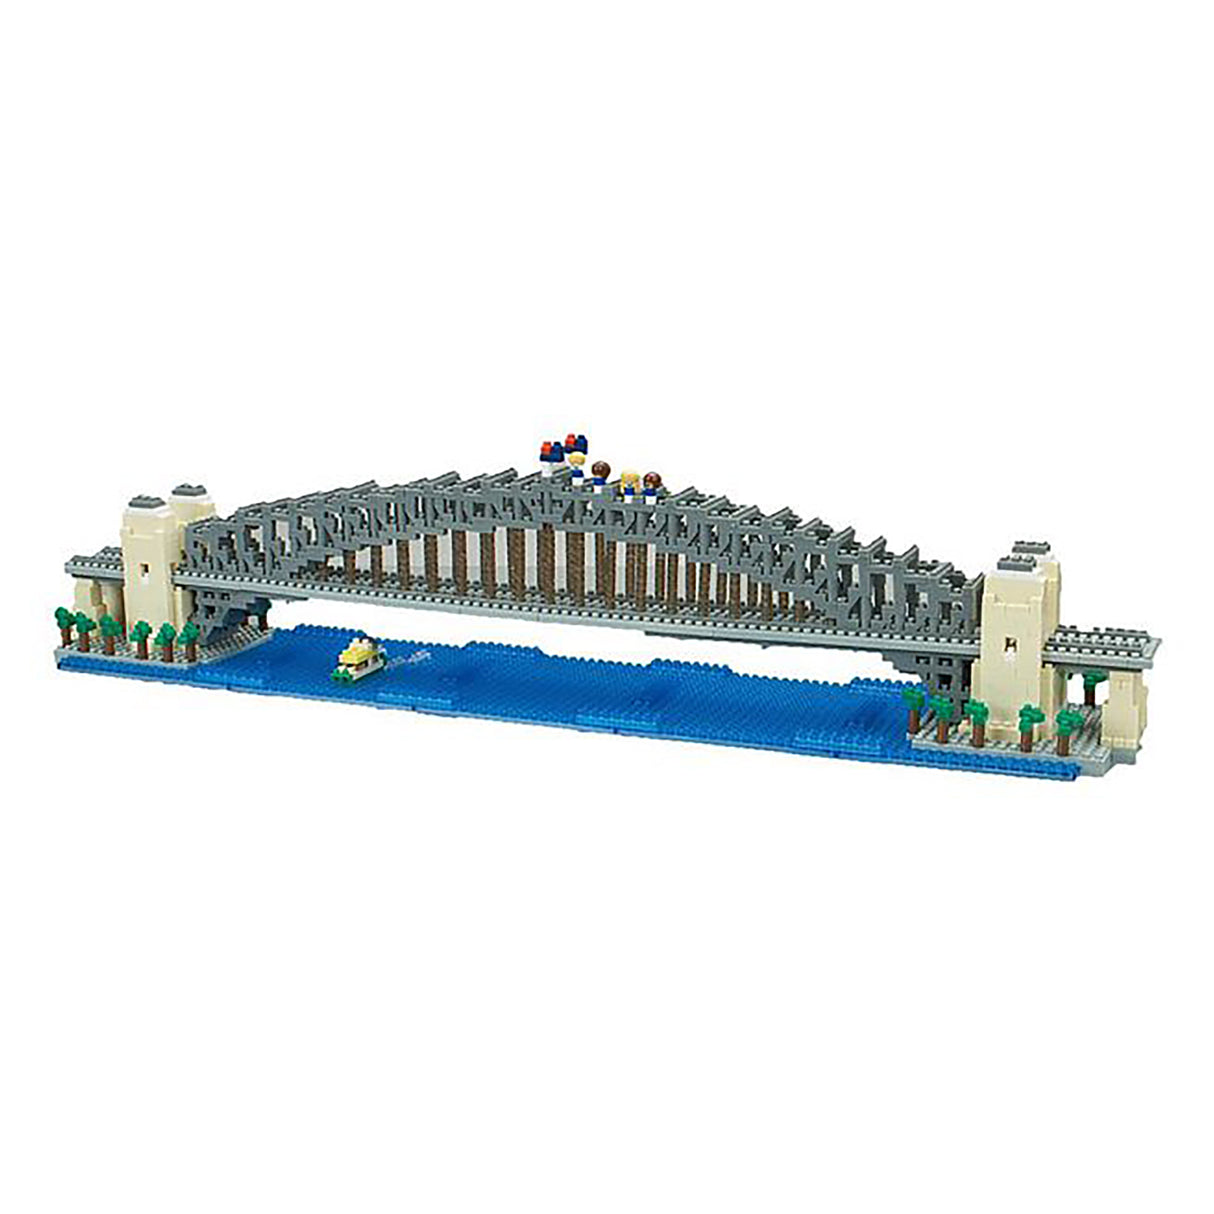 nanoblock Sydney Harbour Bridge Deluxe (1500 pieces)